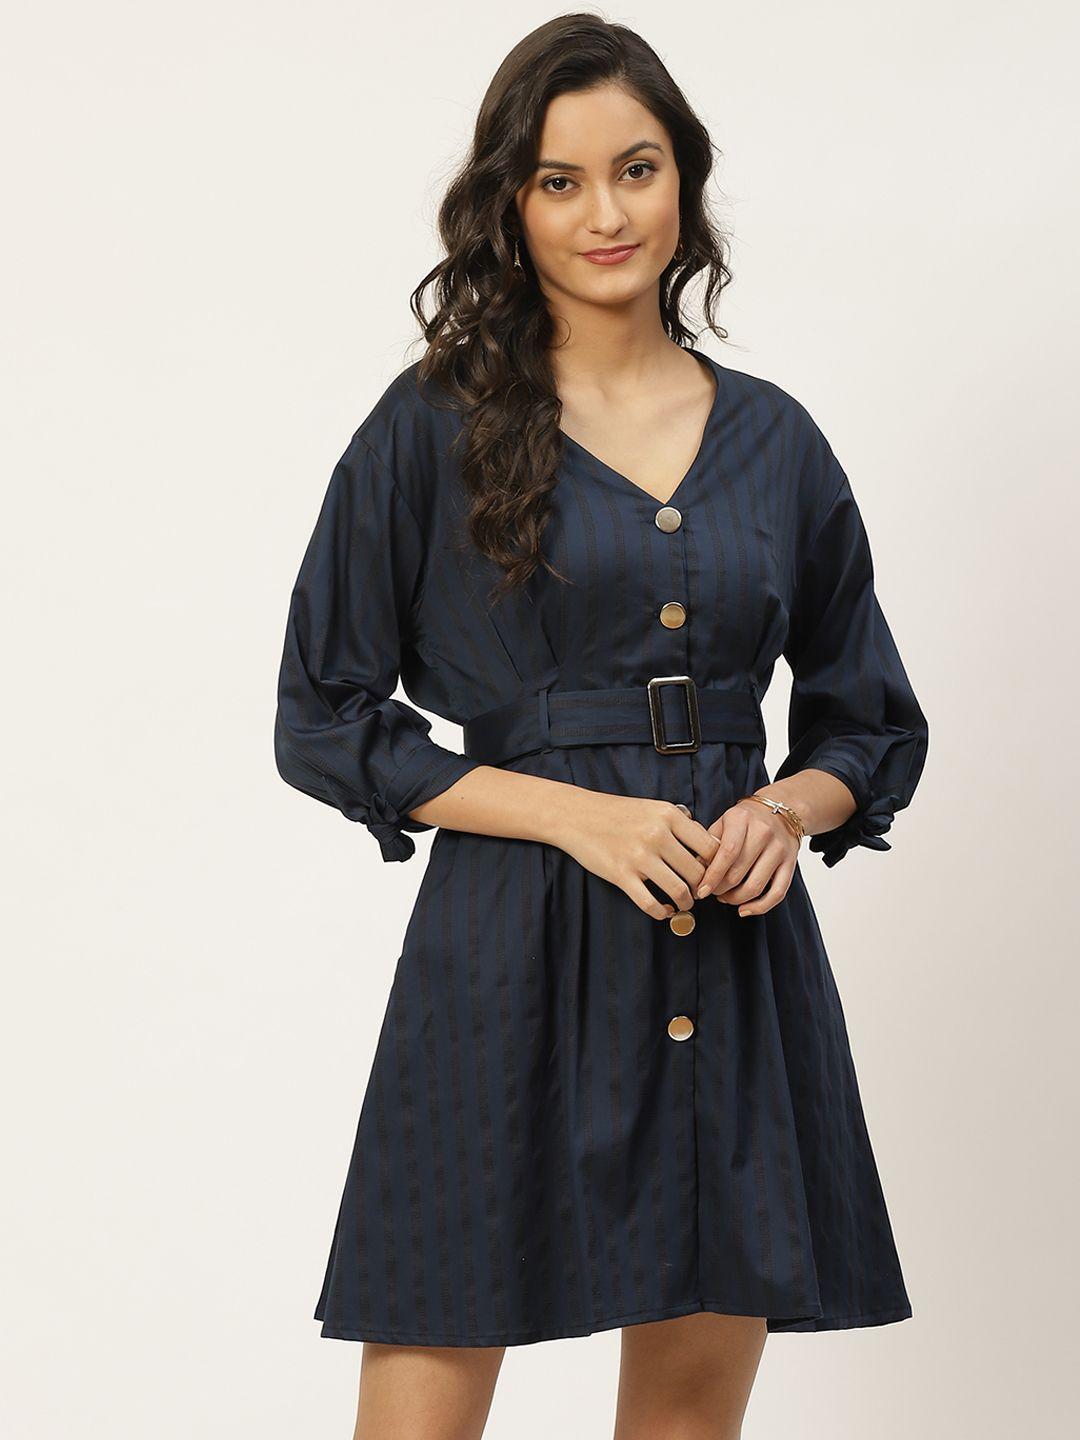 woowzerz women navy blue & black striped a-line dress with belt